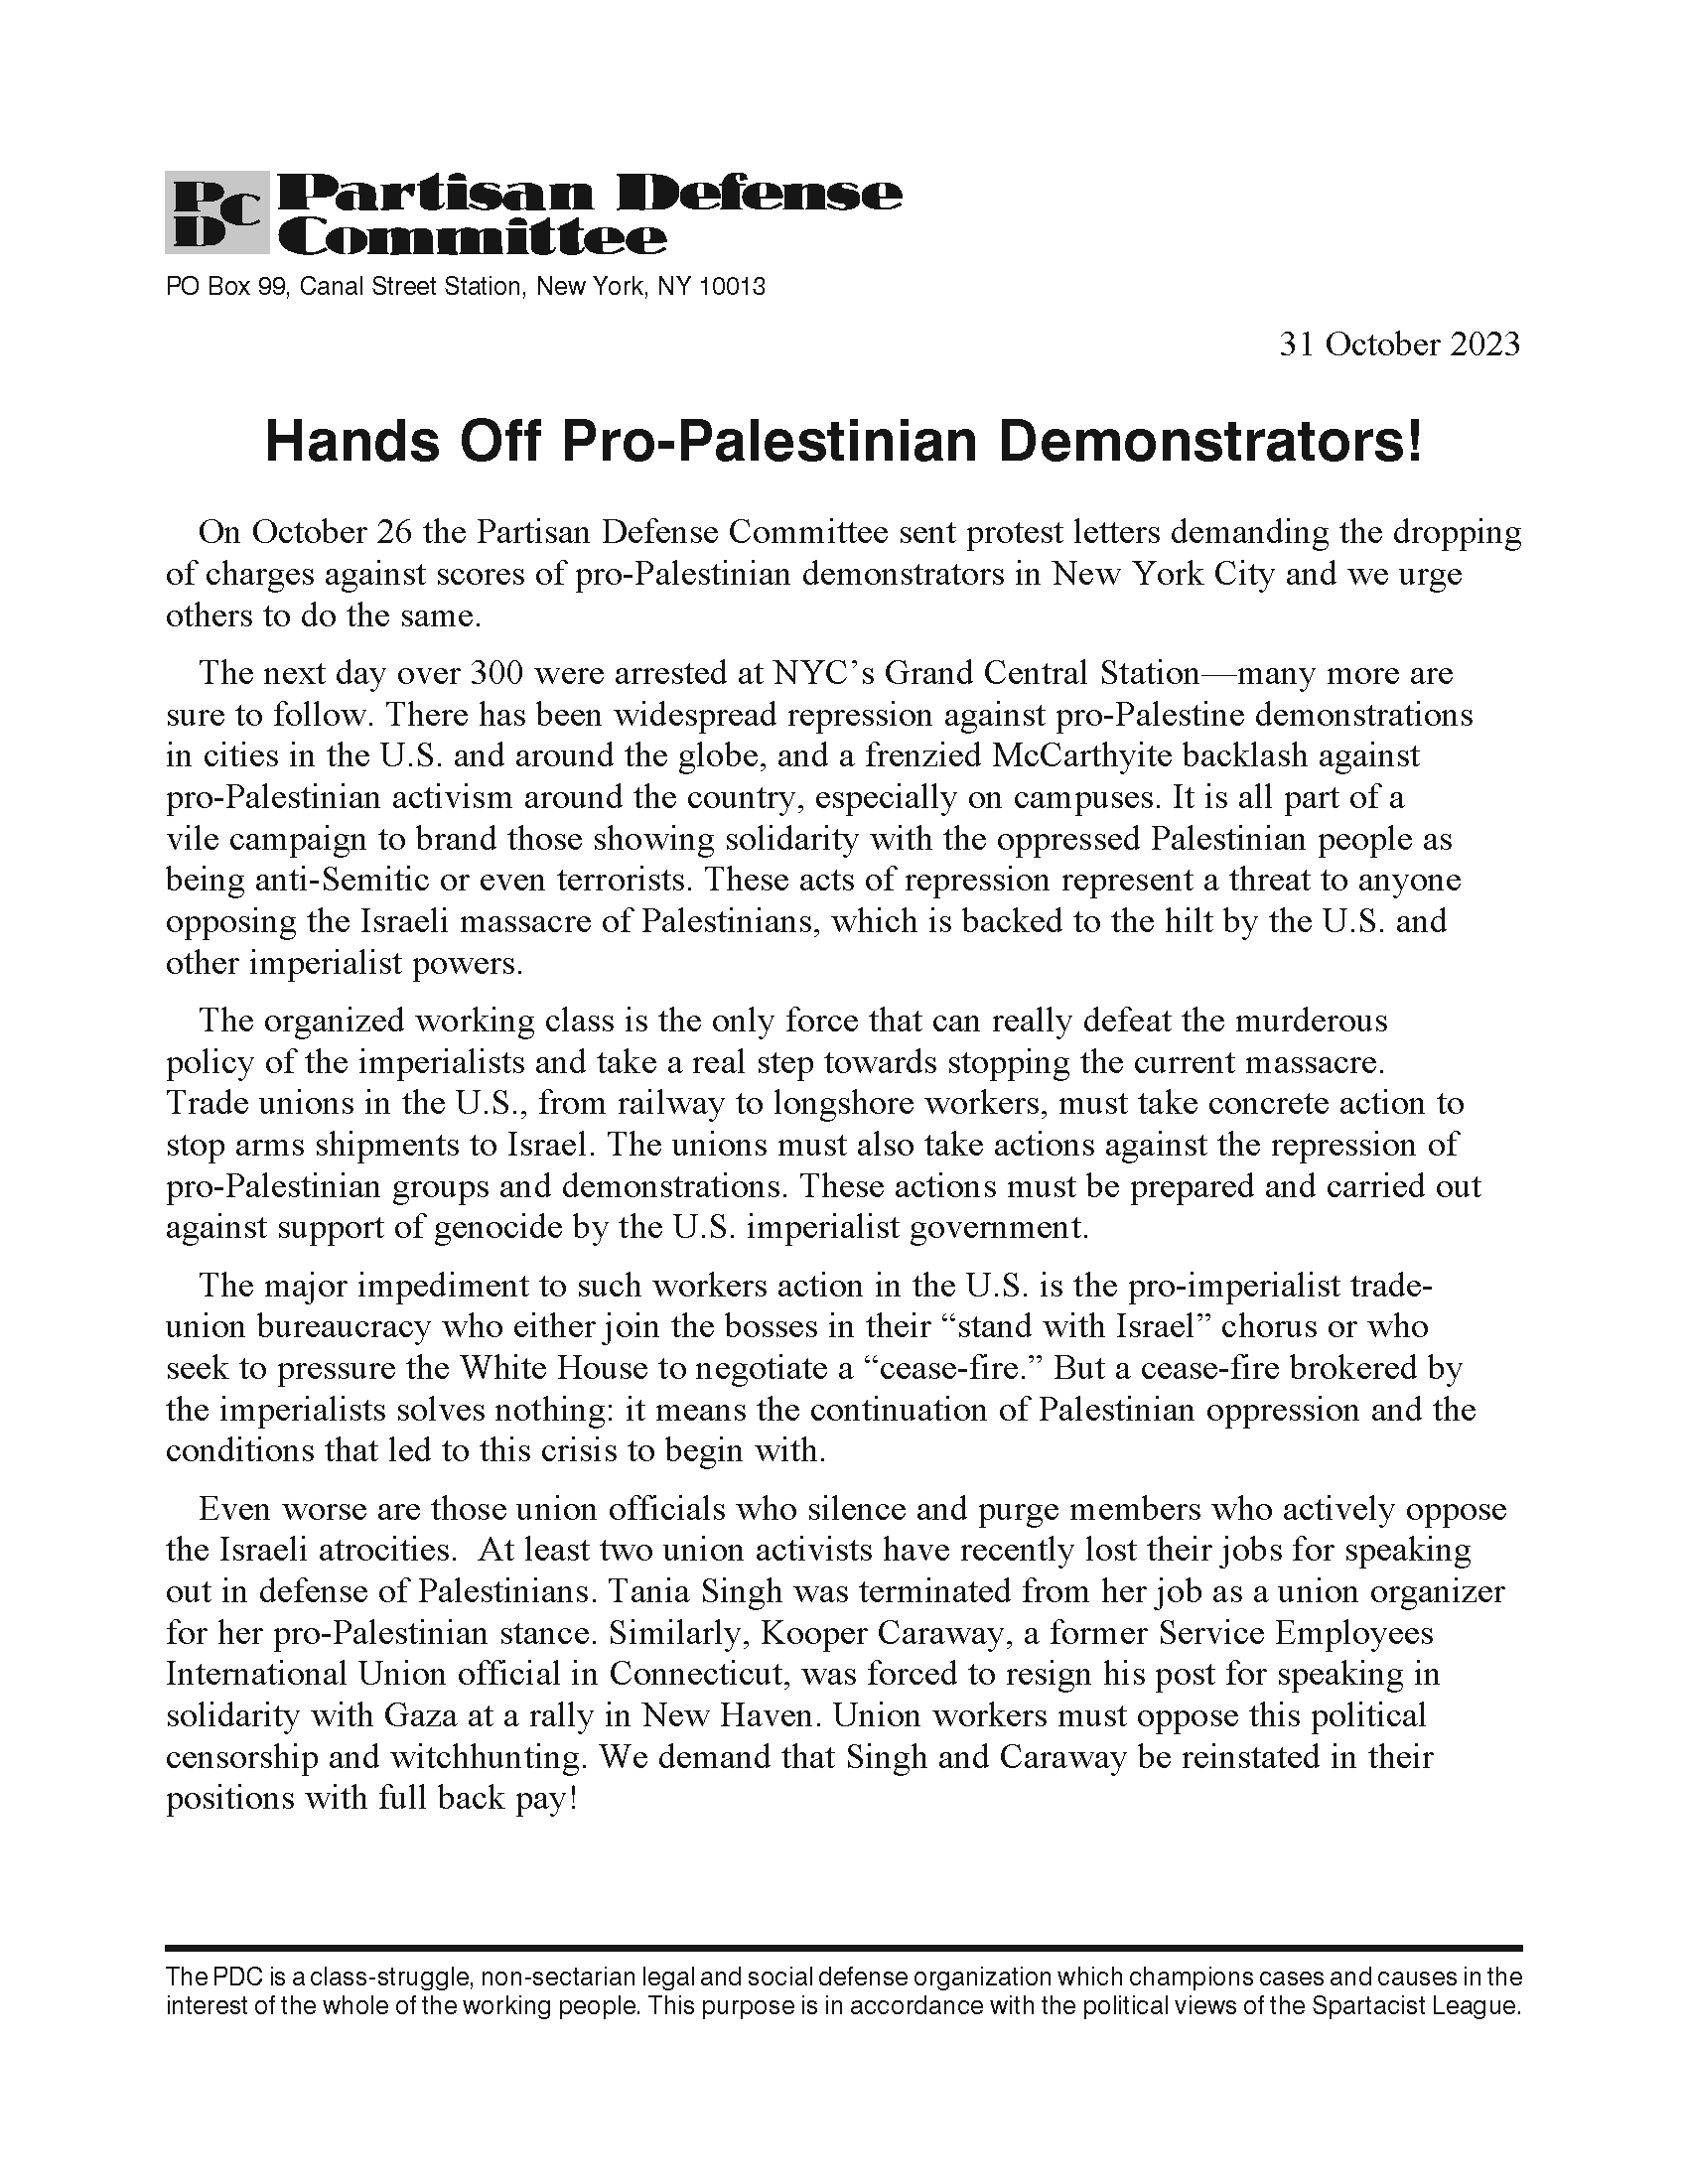 PDC Statement: Hands Off Pro-Palestinian Demonstrators!